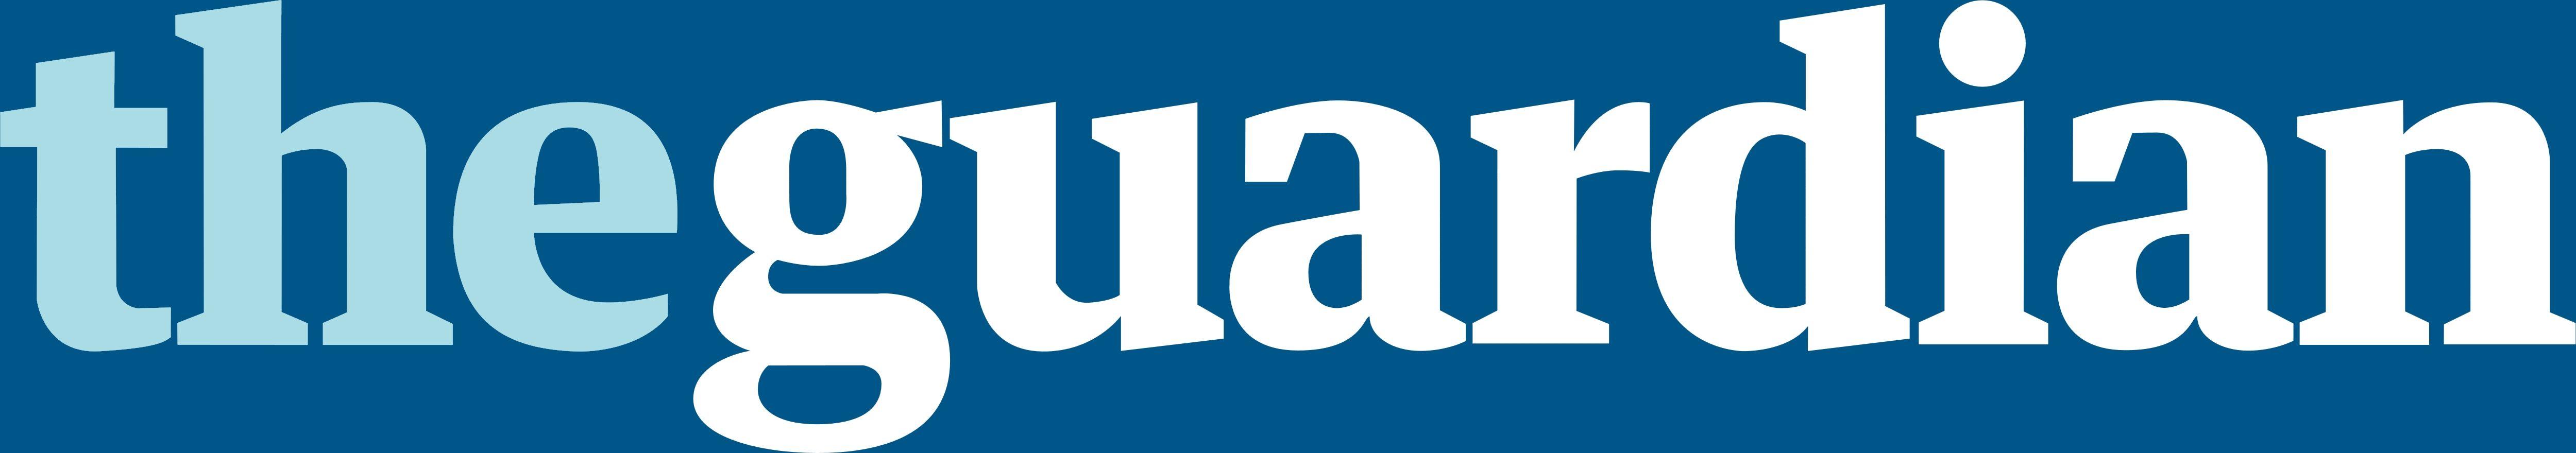 Guardian Logo - The Guardian – Logos Download